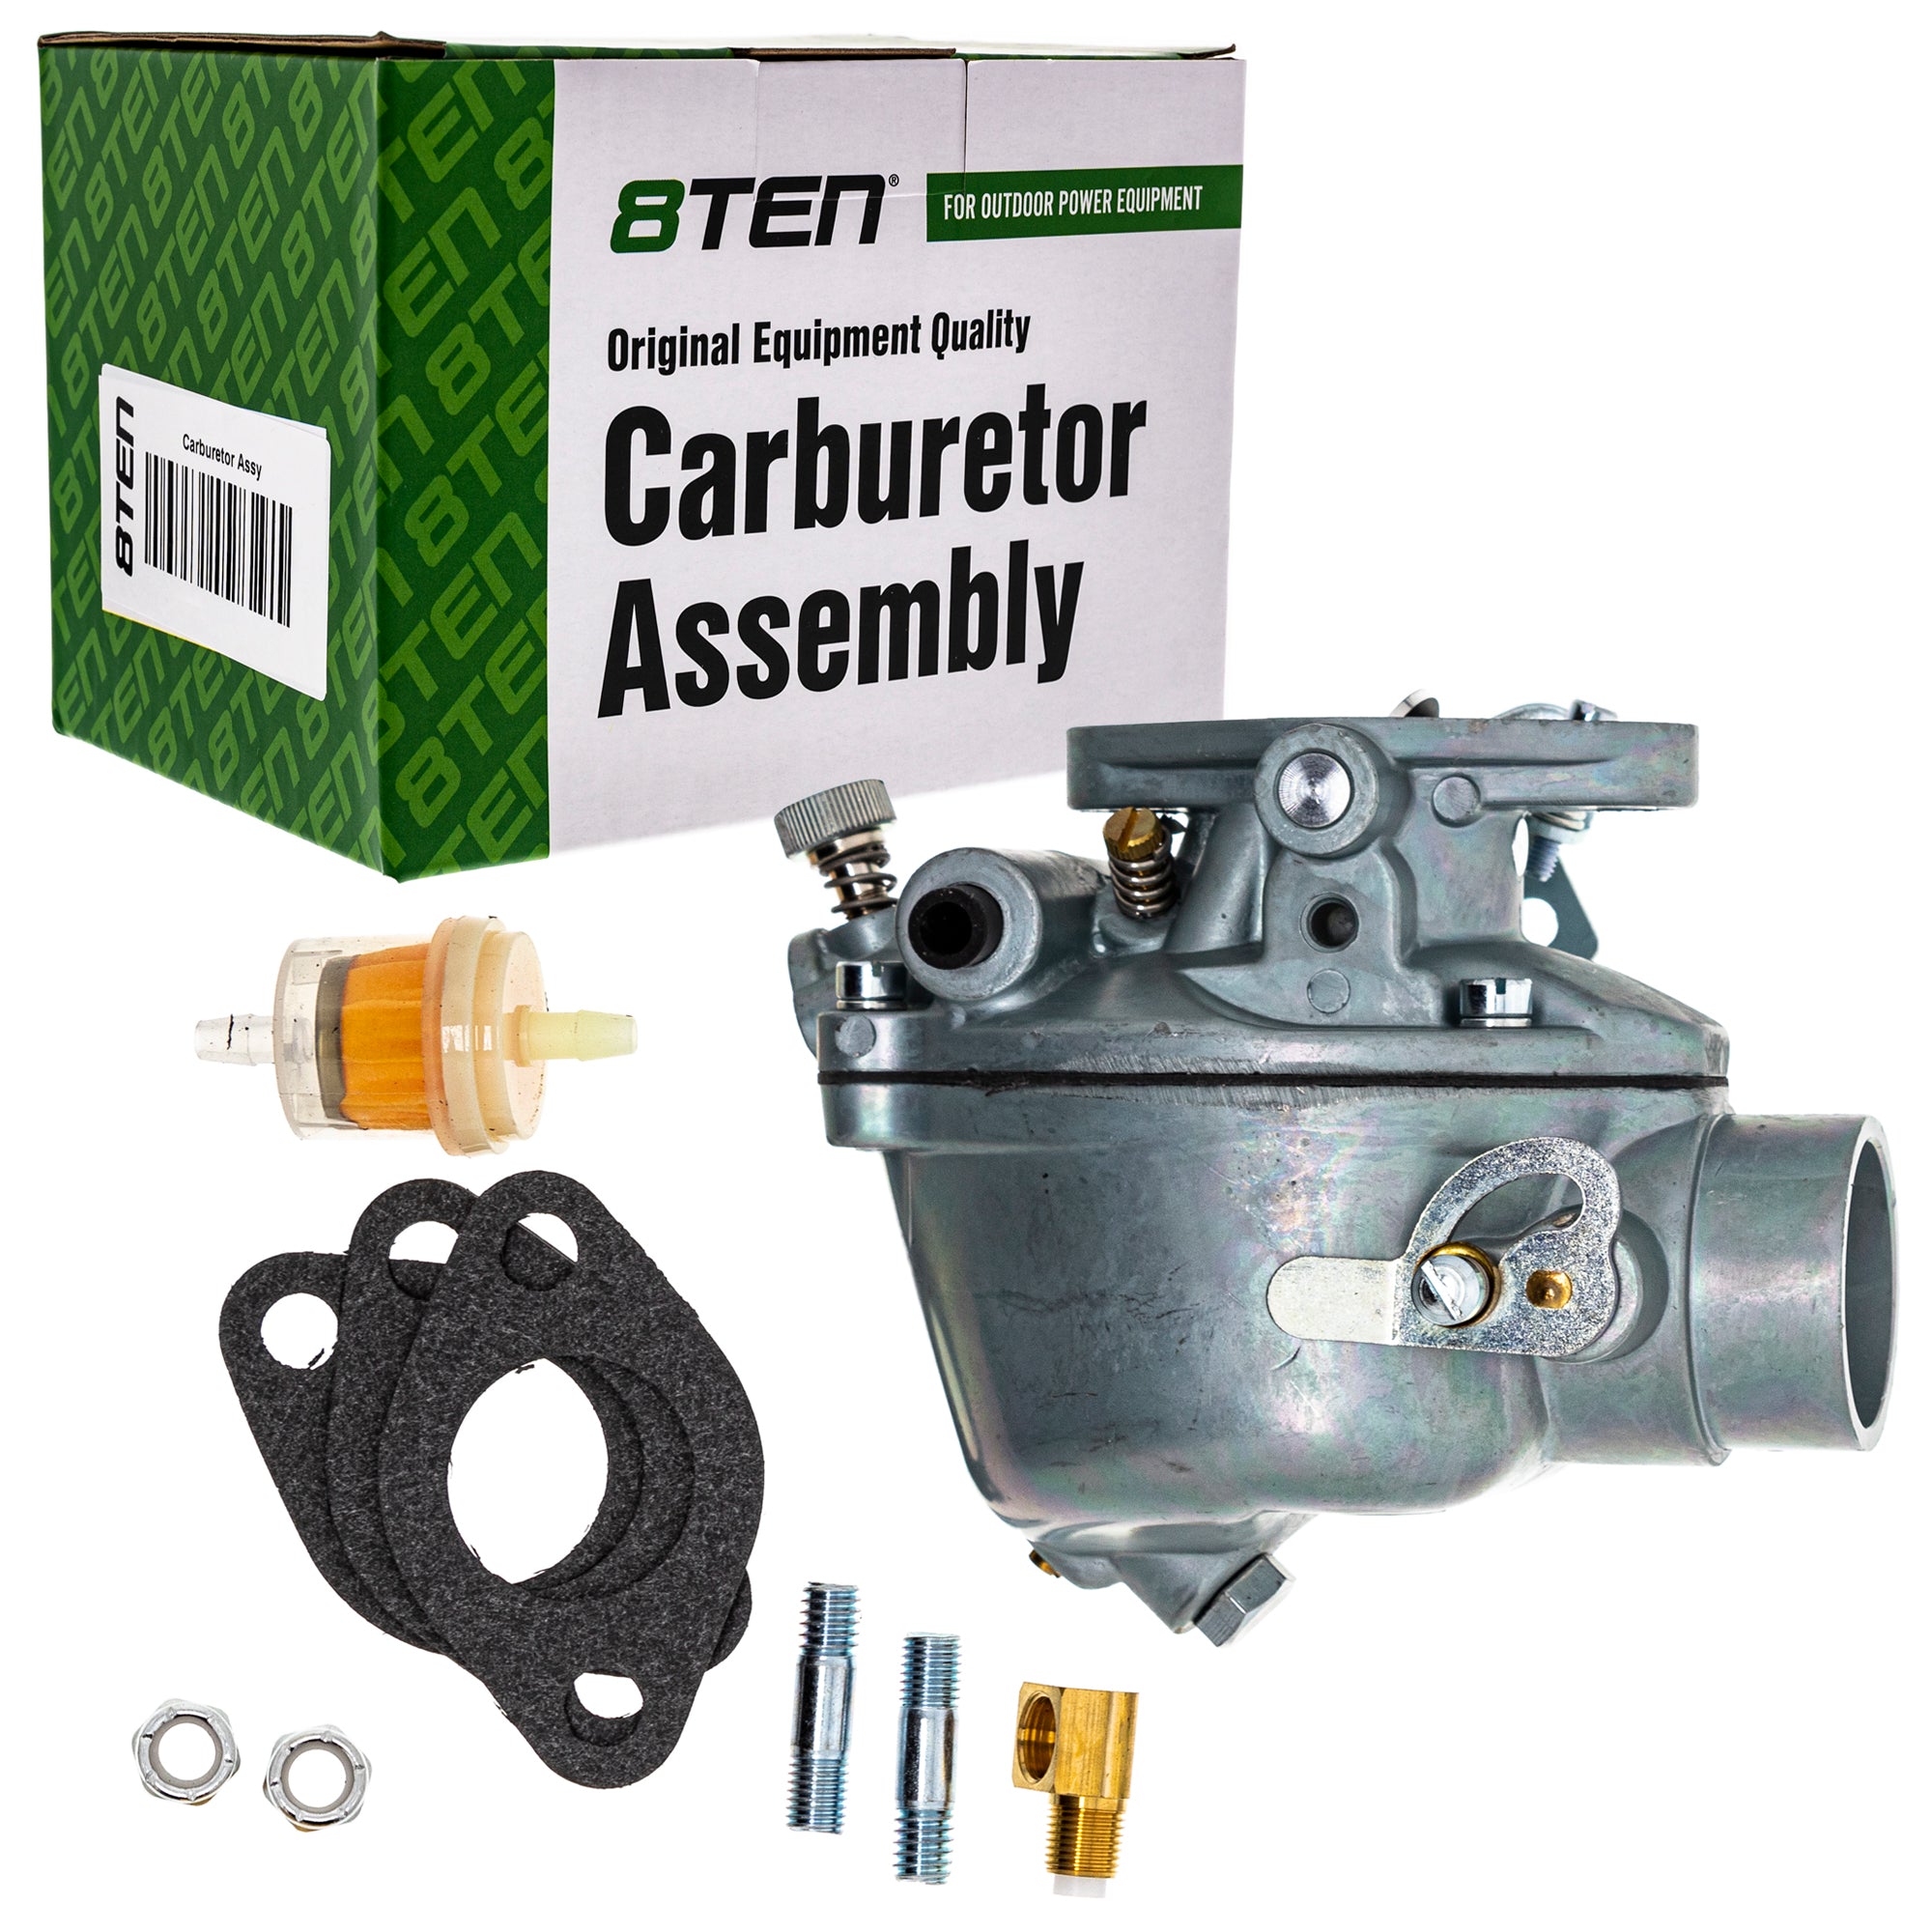 8TEN 810-KCR2286B Carburetor Assembly for zOTHER